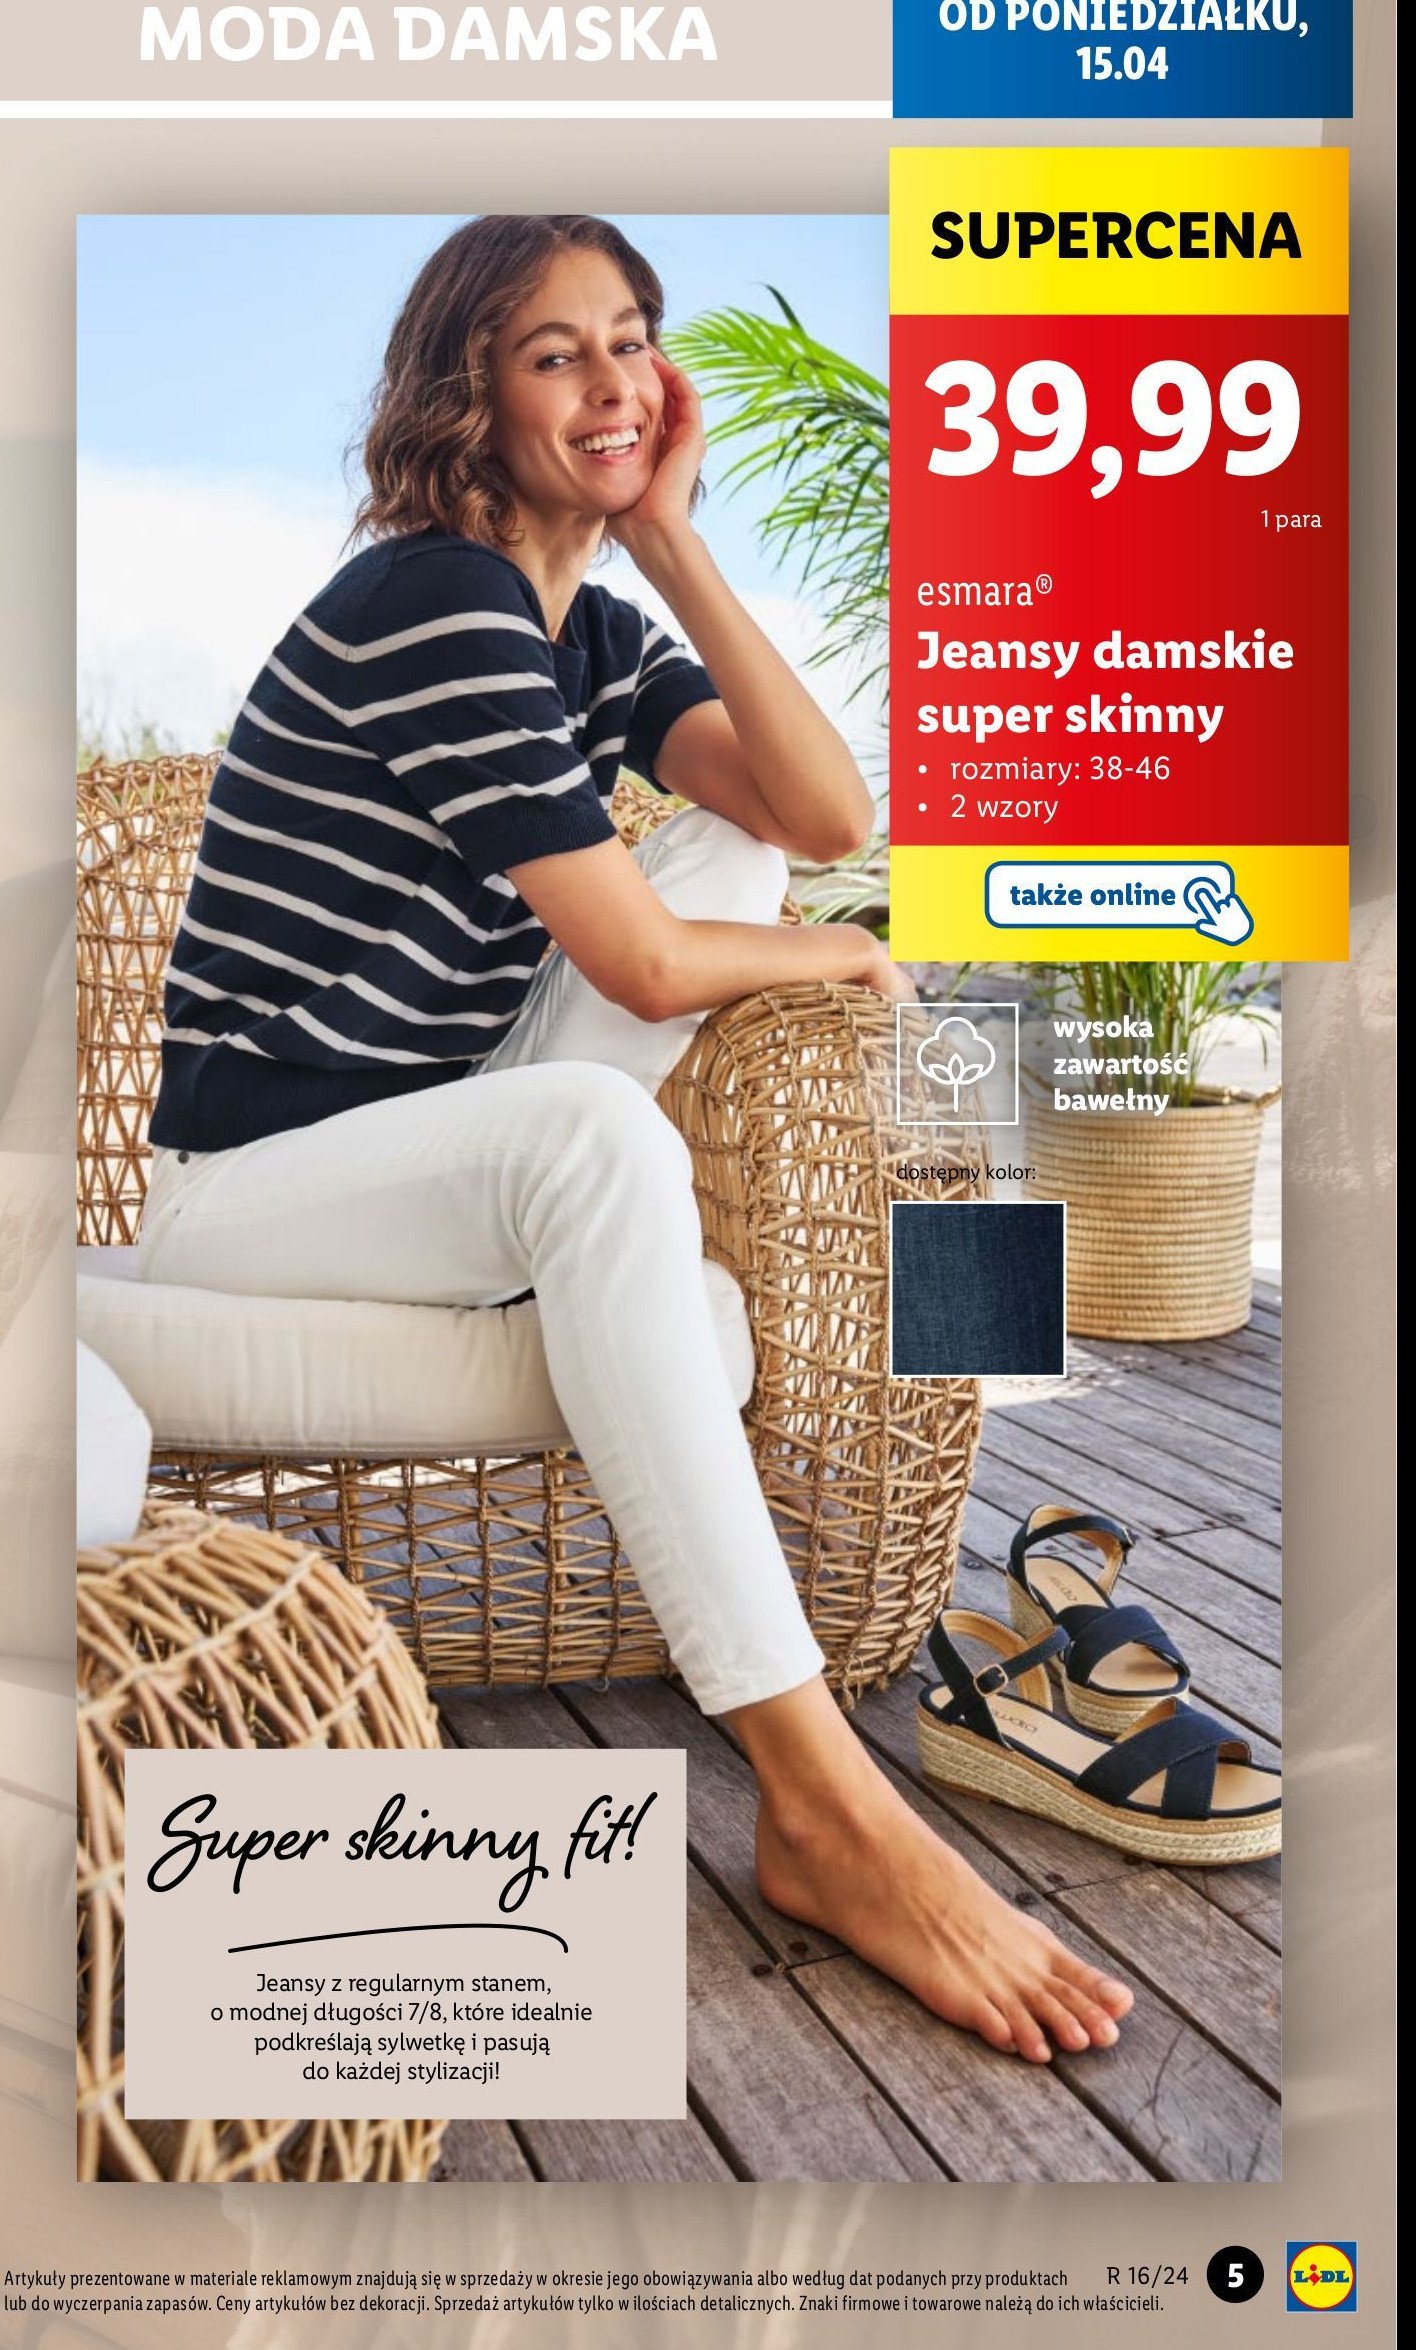 Jeansy damskie super skinny fit Esmara promocja